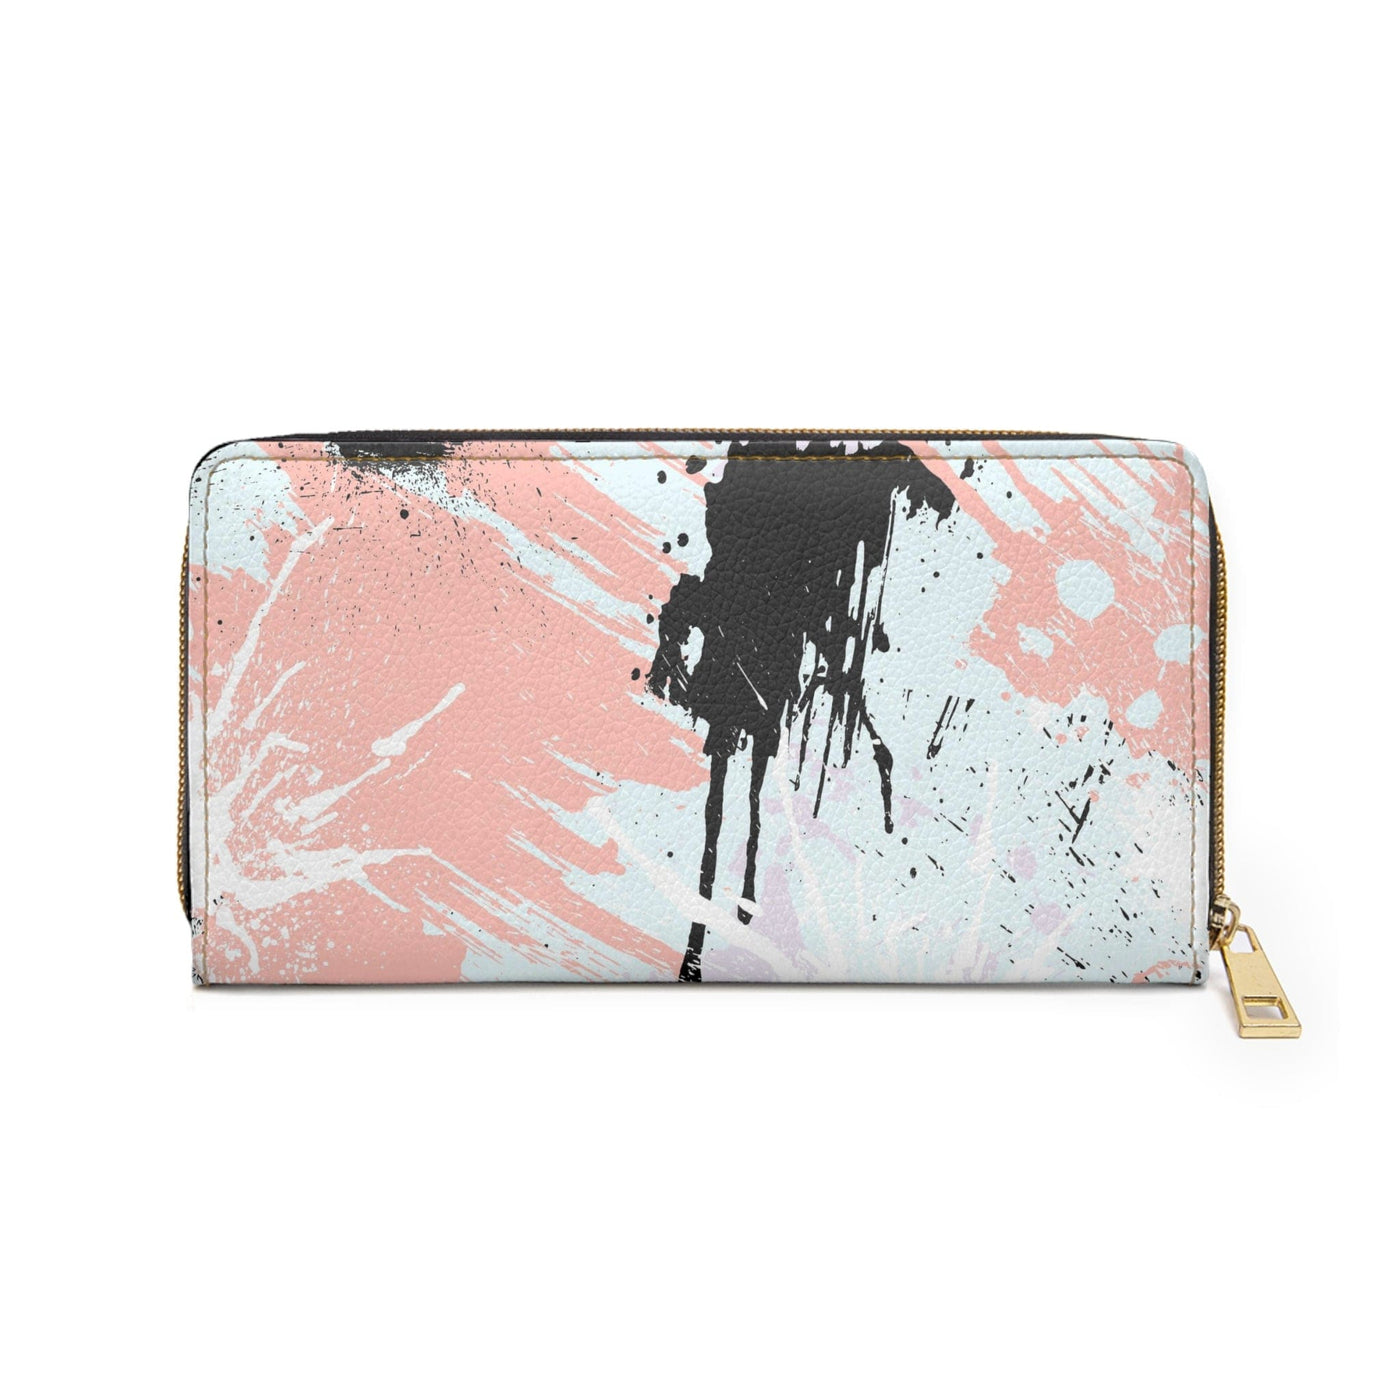 Abstract Pink Black White Paint Splatter Pattern Womens Zipper Wallet Clutch